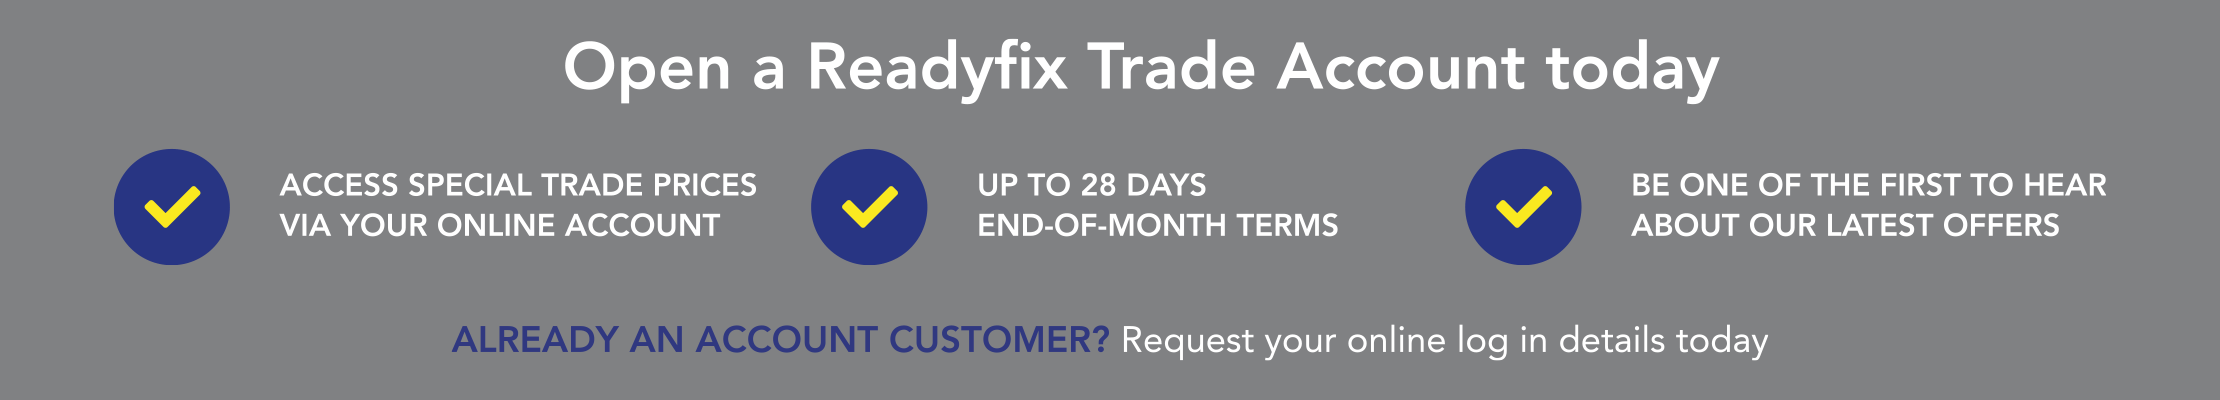 Readyfix-trade-account-benefits.png